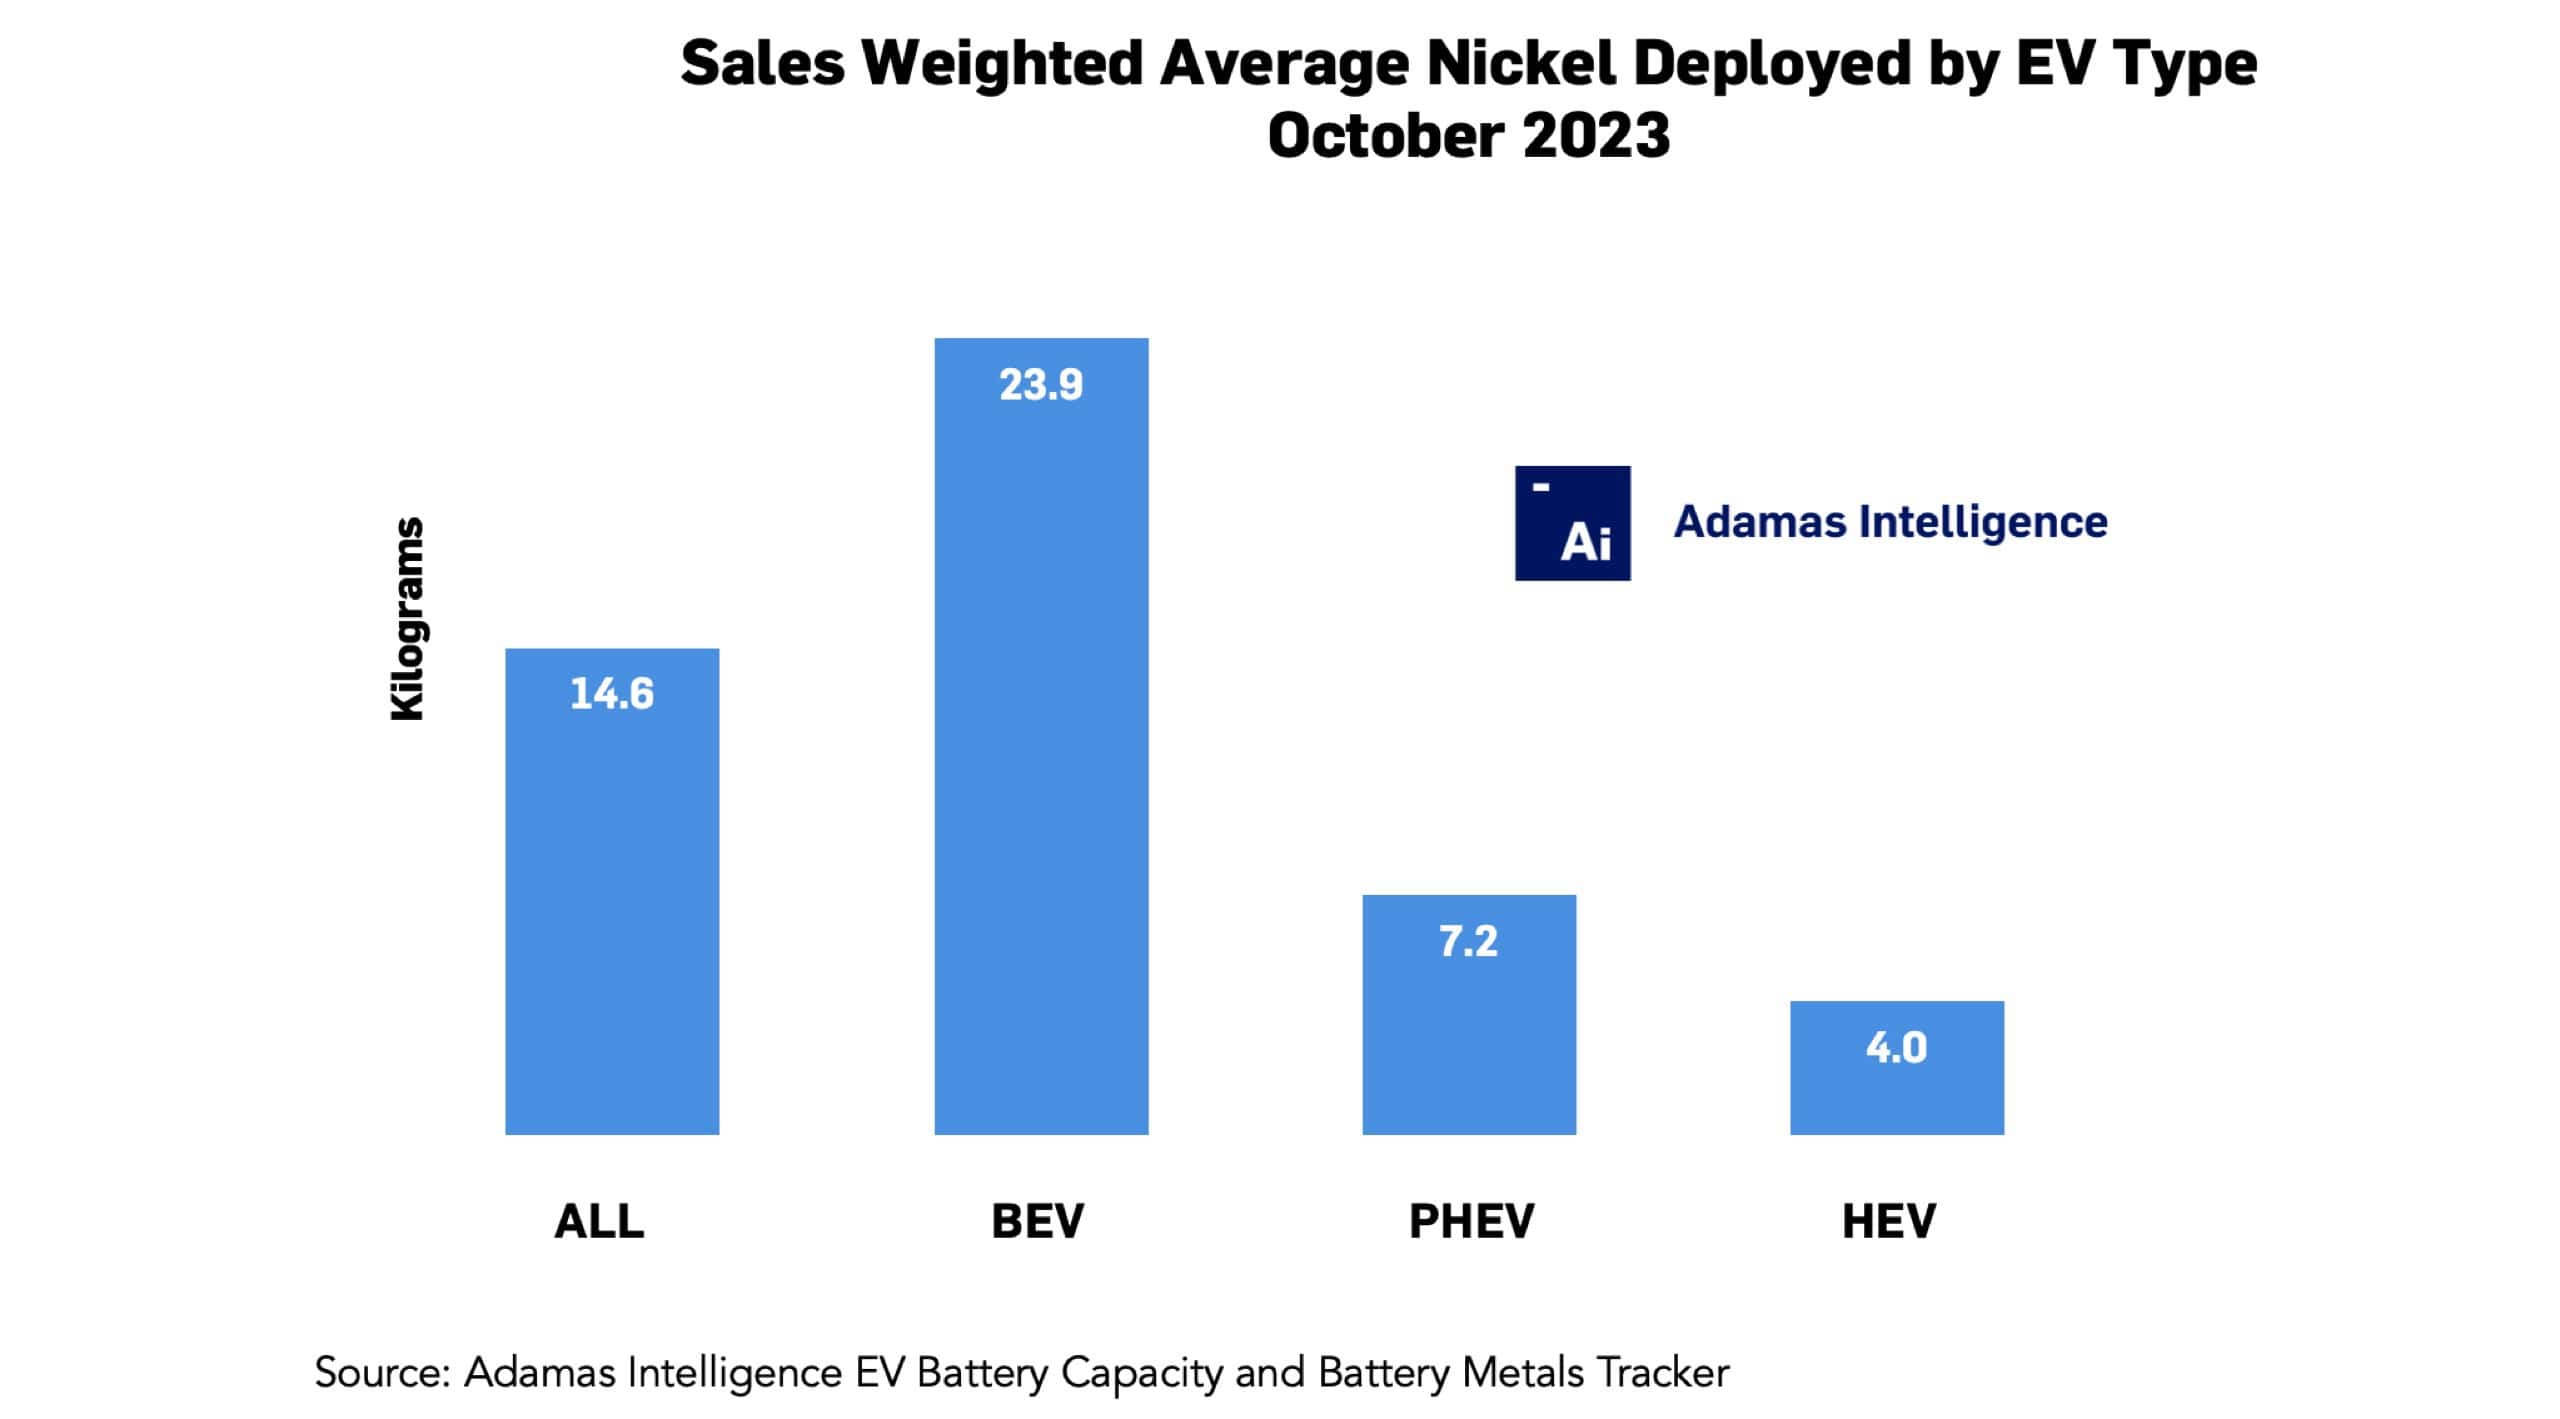 Nickel usage grows across all EV types